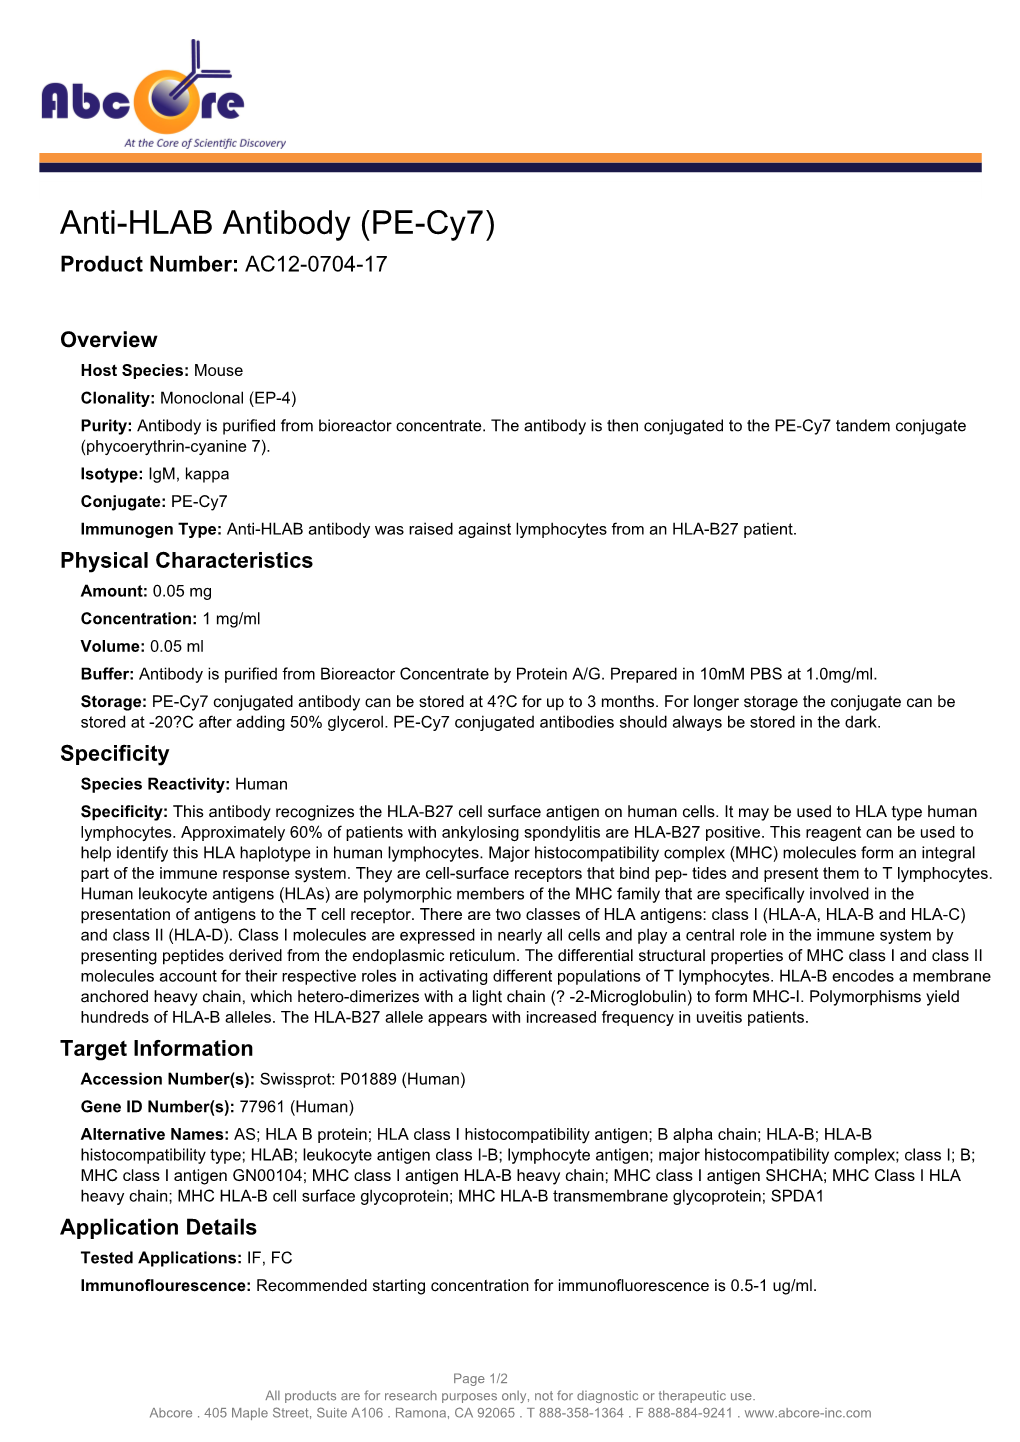 Anti-HLAB Antibody (PE-Cy7) Product Number: AC12-0704-17